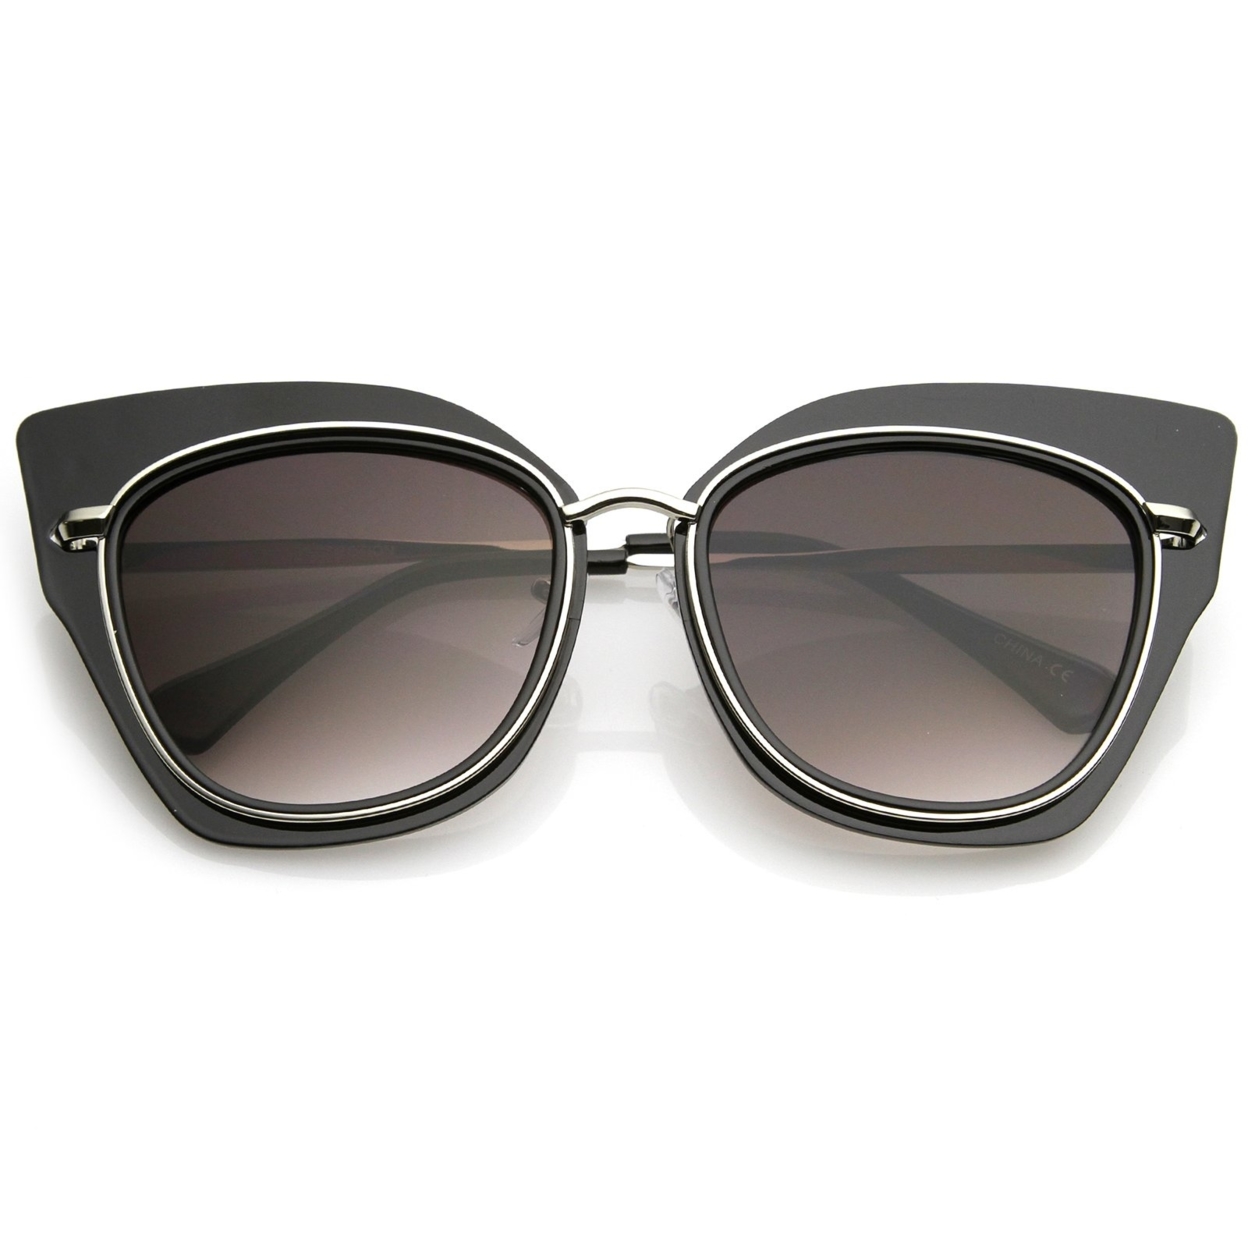 Women's Oversize Metal Trim Slim Arms Super Flat Lens Cat Eye Sunglasses 57mm - Black-Gold / Lavender